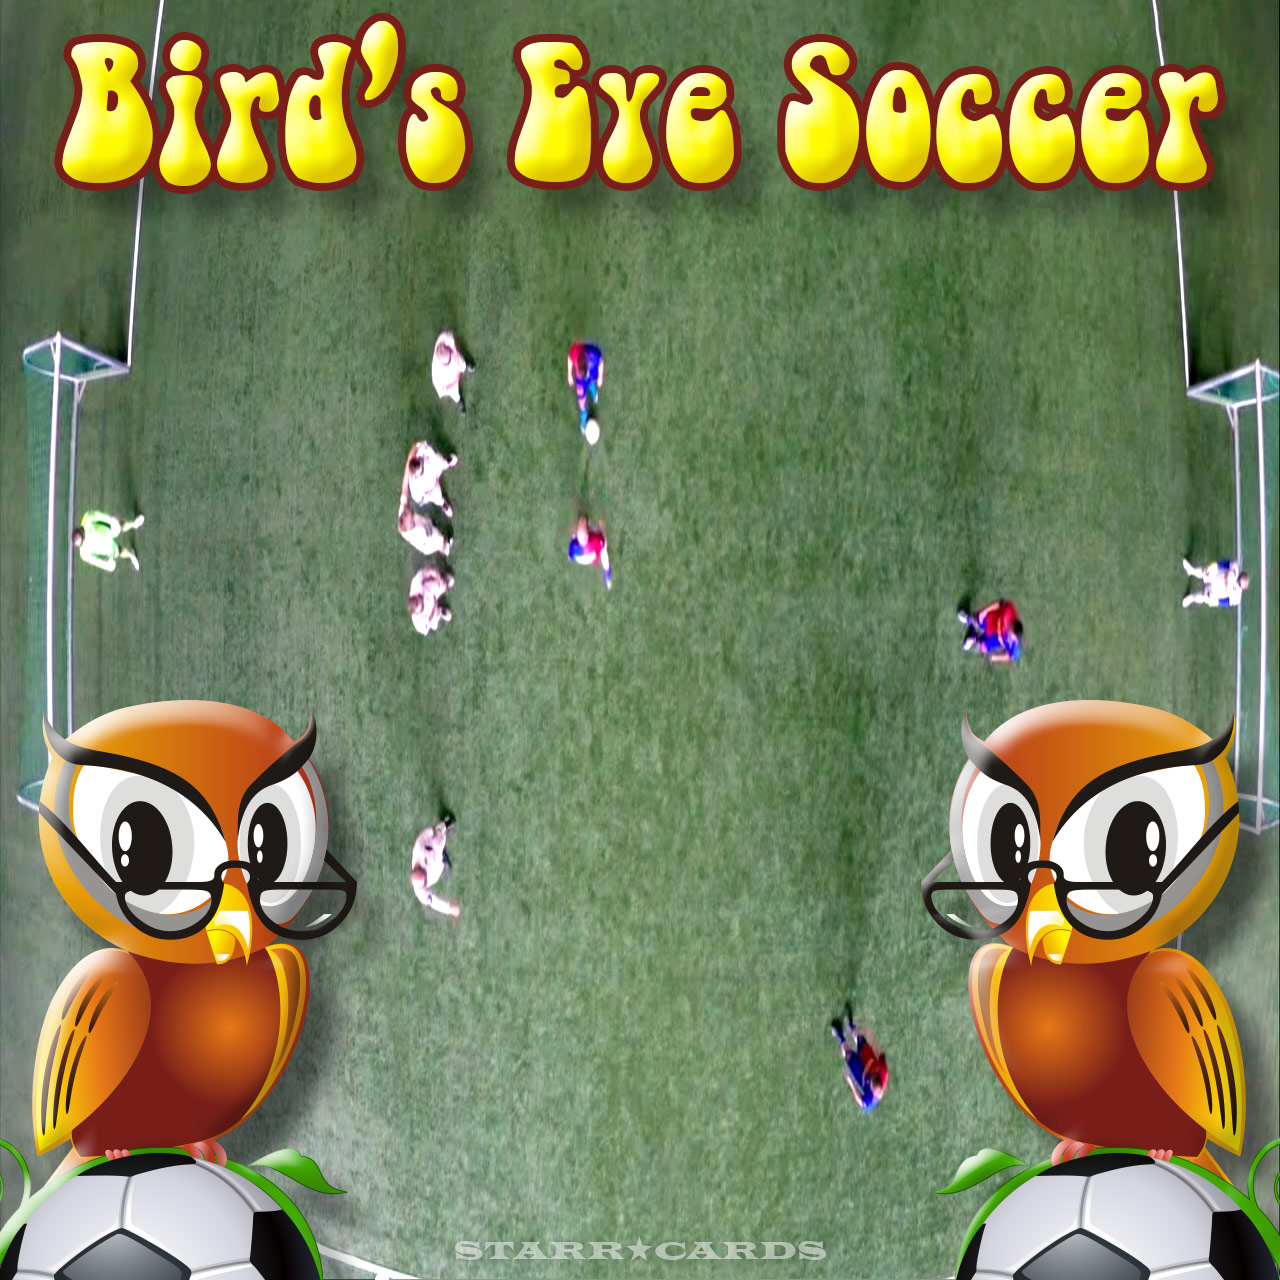 Playing bird's-eye view soccer isn't easy, nor is binocular soccer